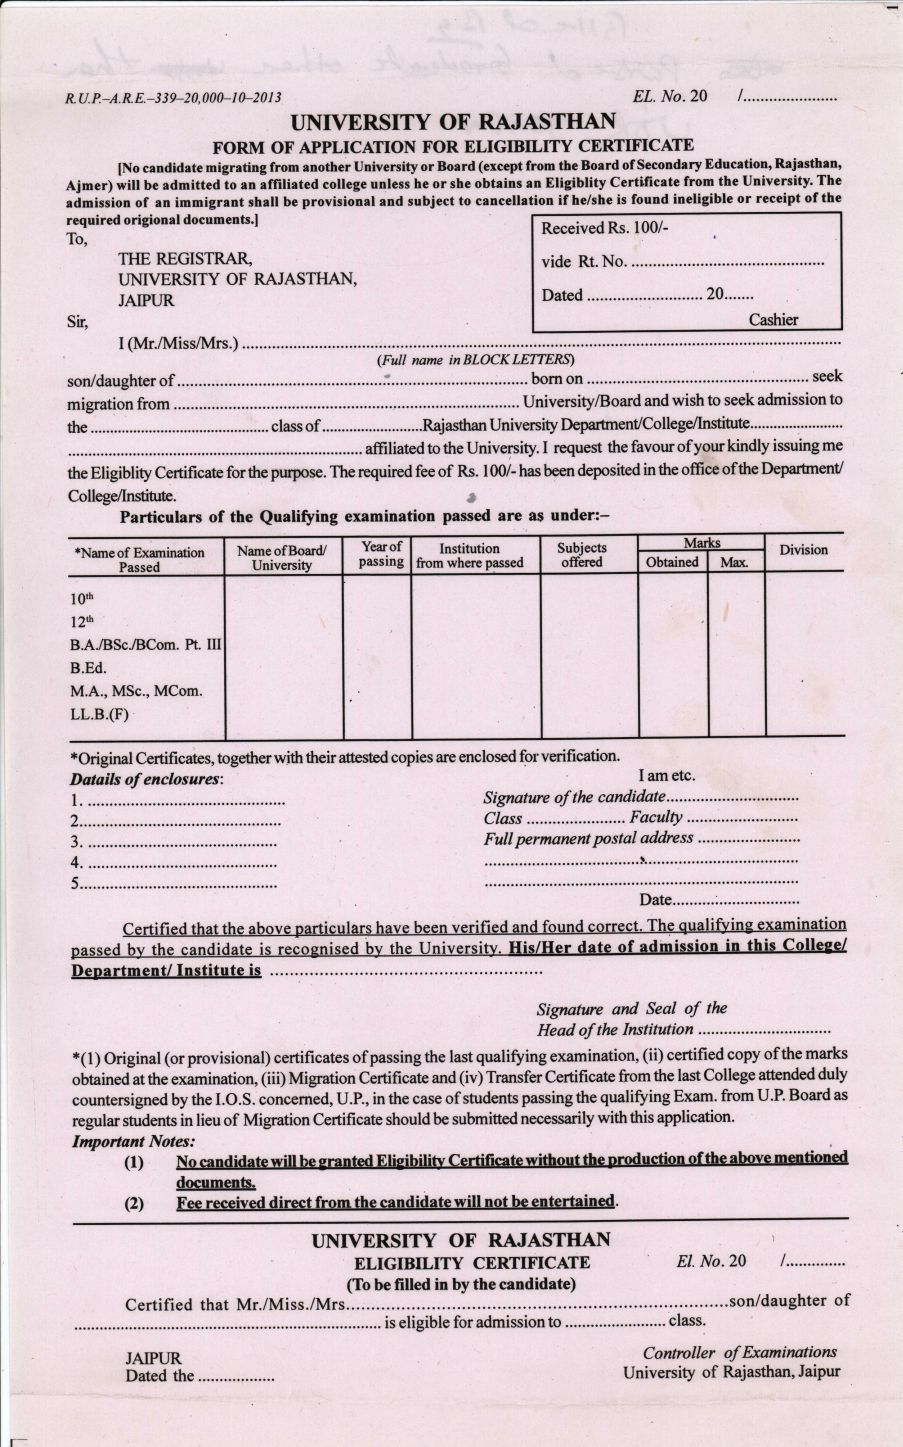 rajasthan university phd application form 2023